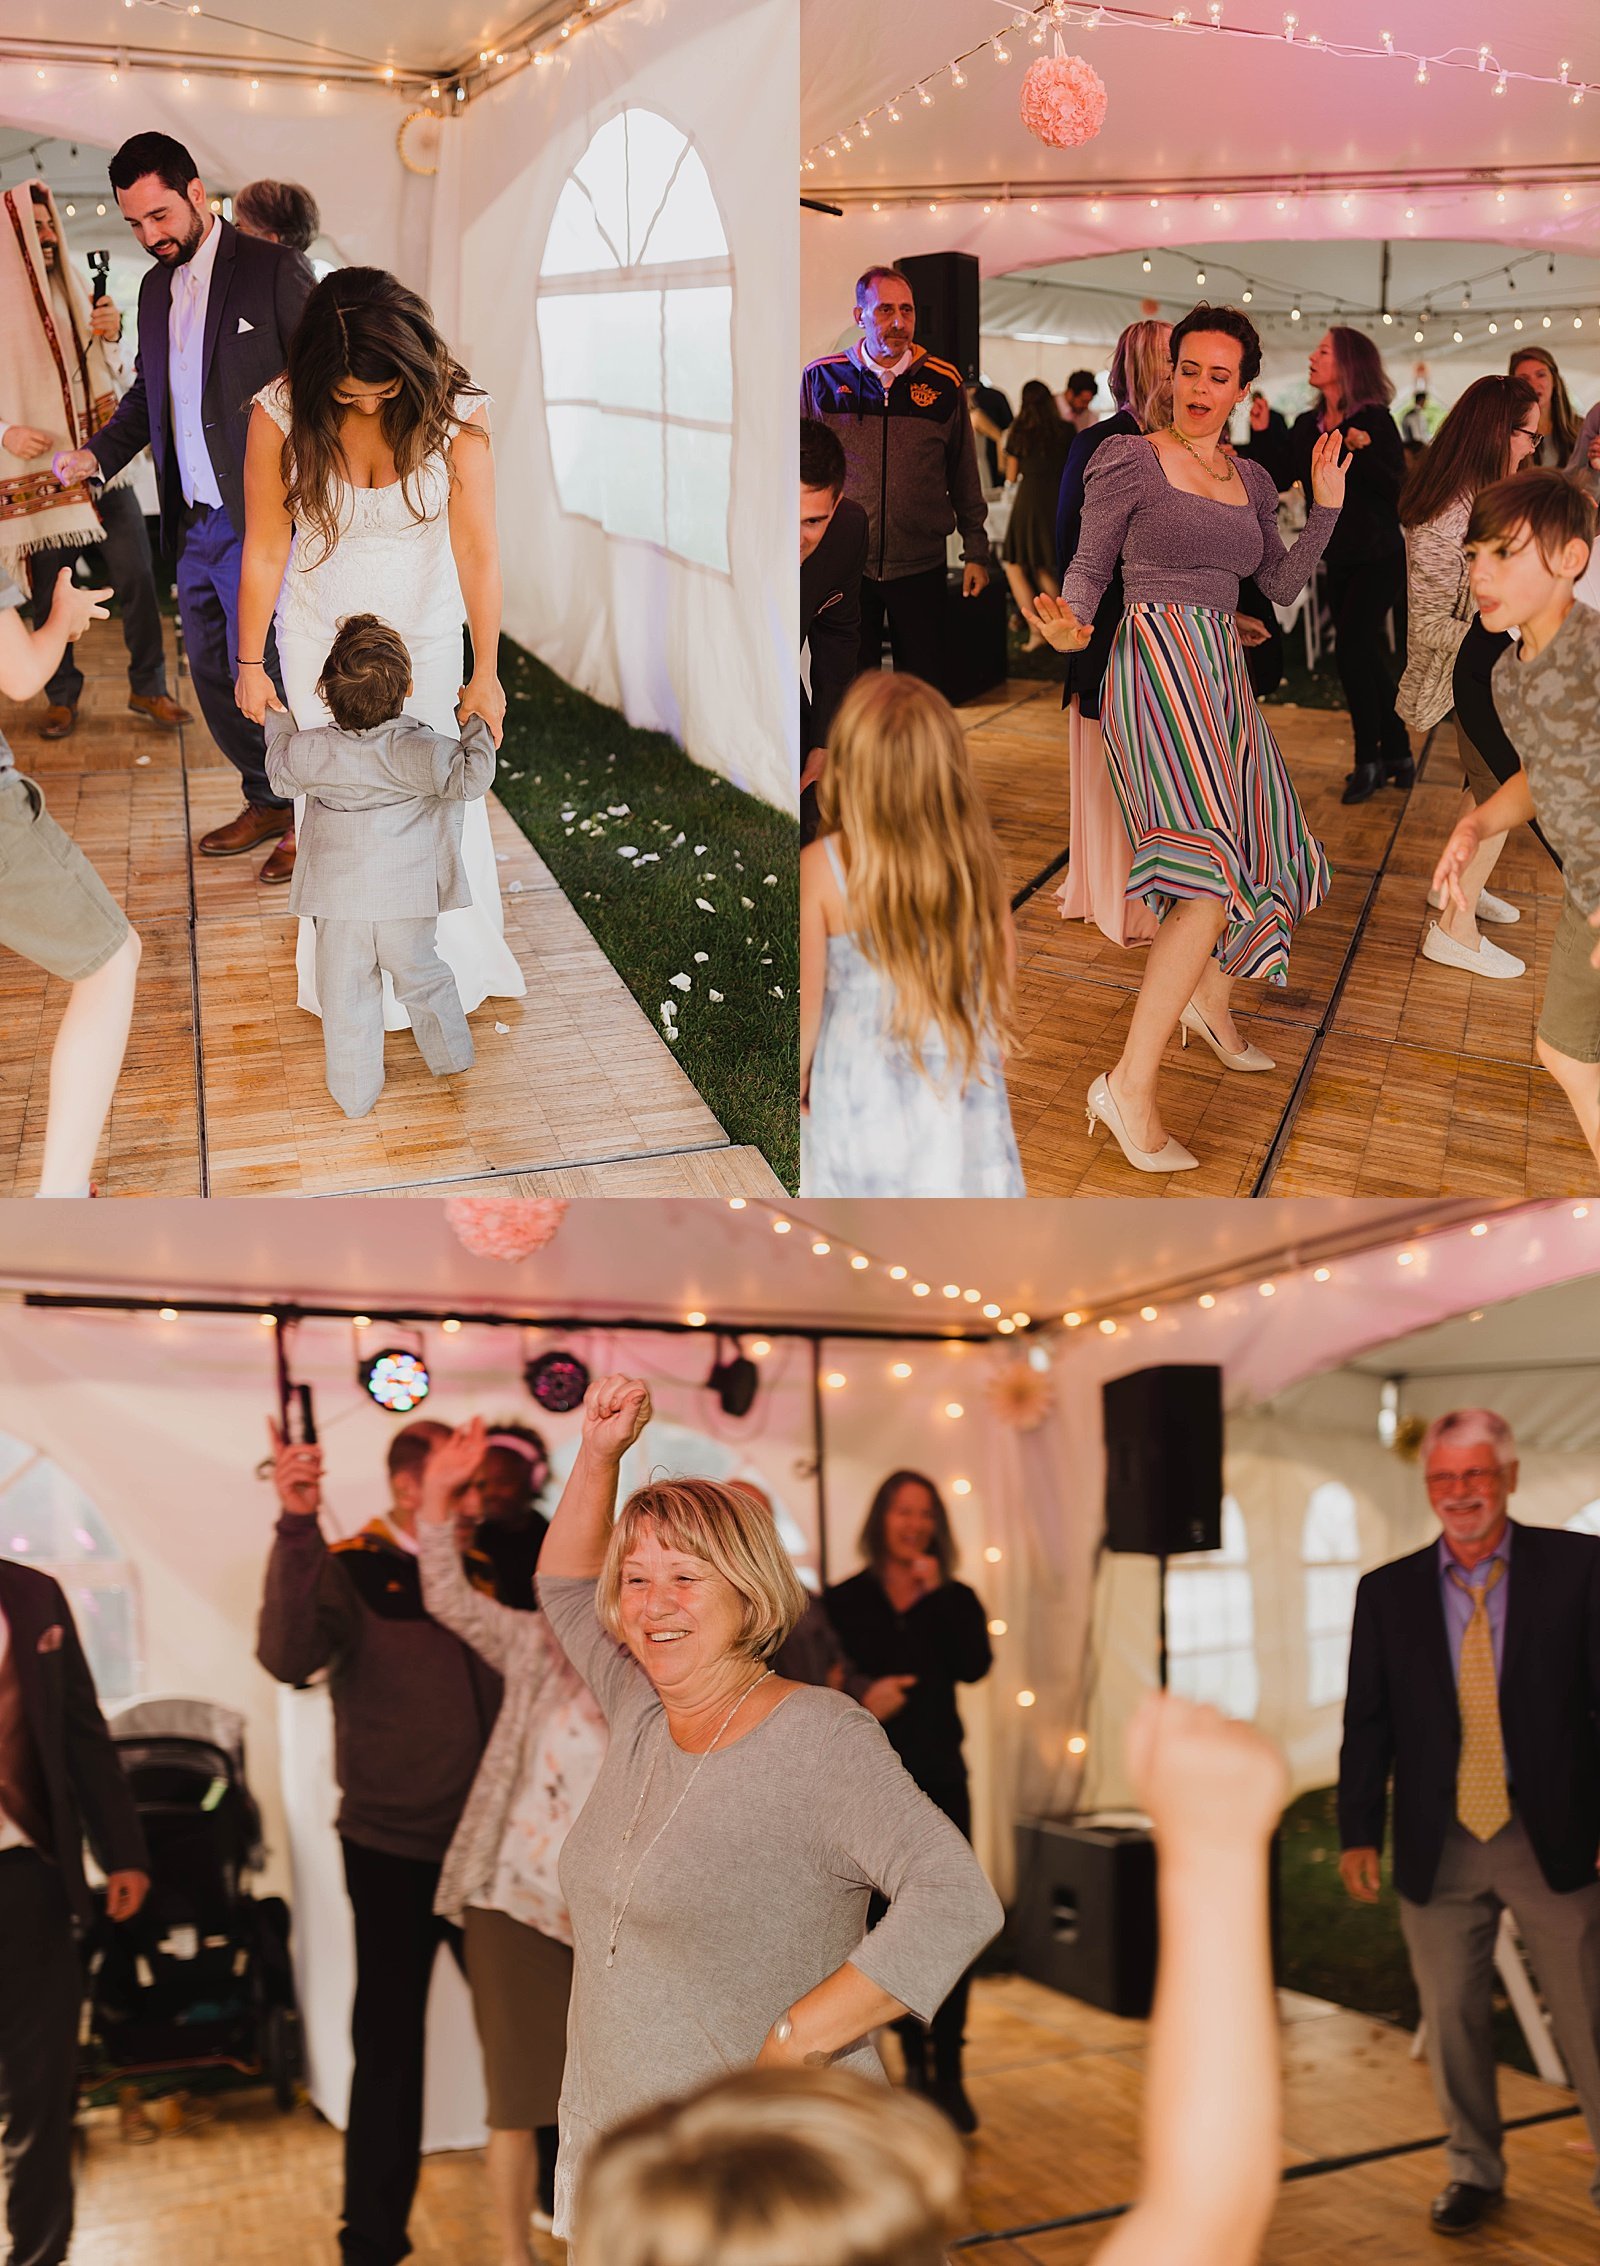  Guests dancing at an Alaska Summer reception in a tent 